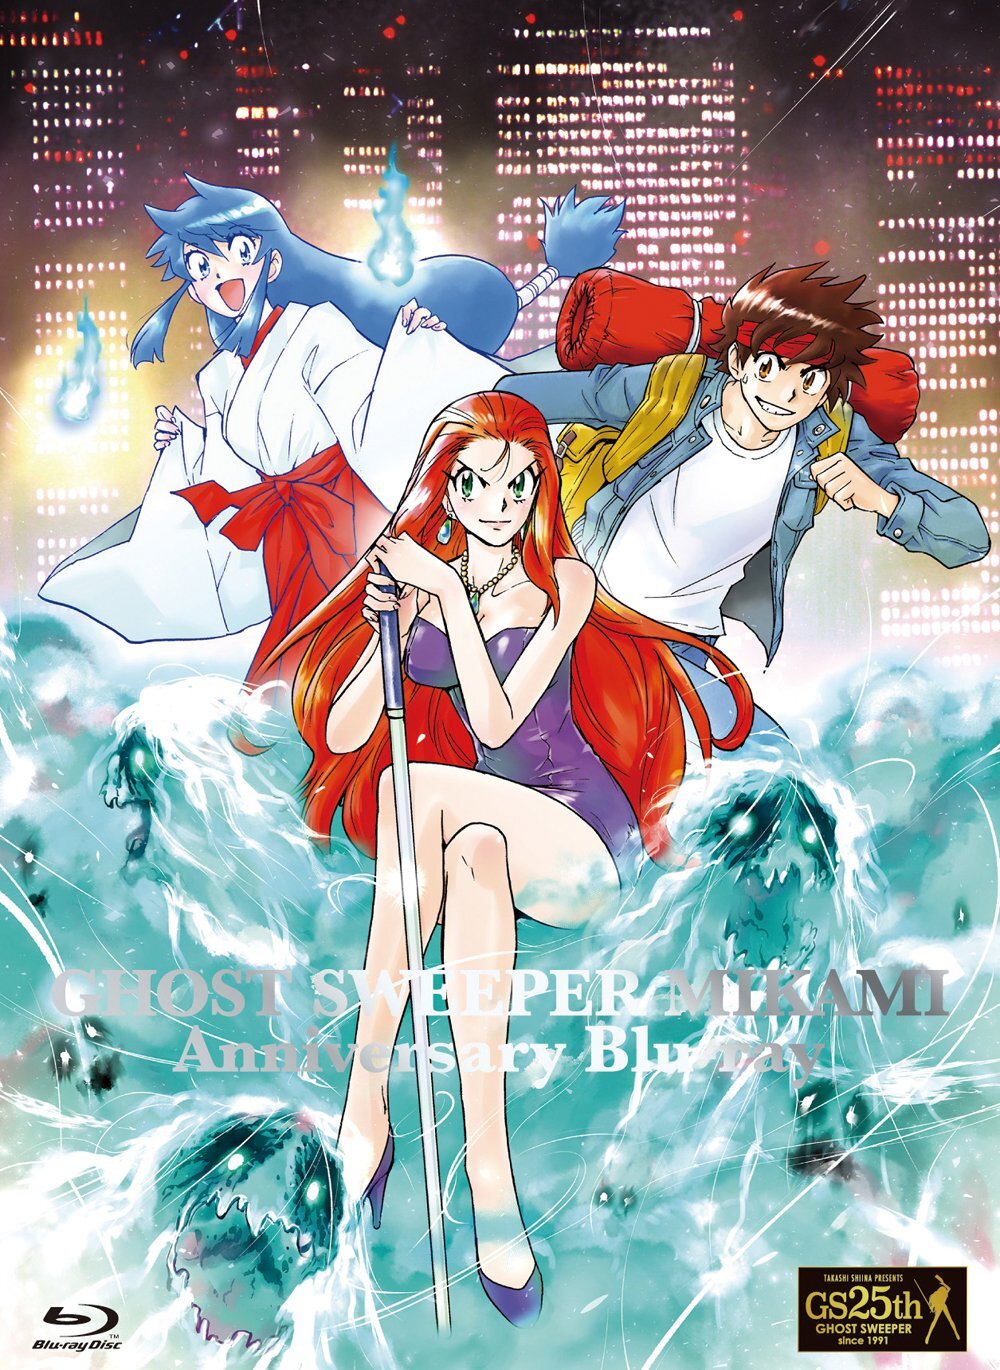 Ghost Sweeper Mikami Anniversary Blu-ray (SD Blu-ray / TVアニメ「GS美神」アニバーサリー・ブルーレイ)  (Japan)